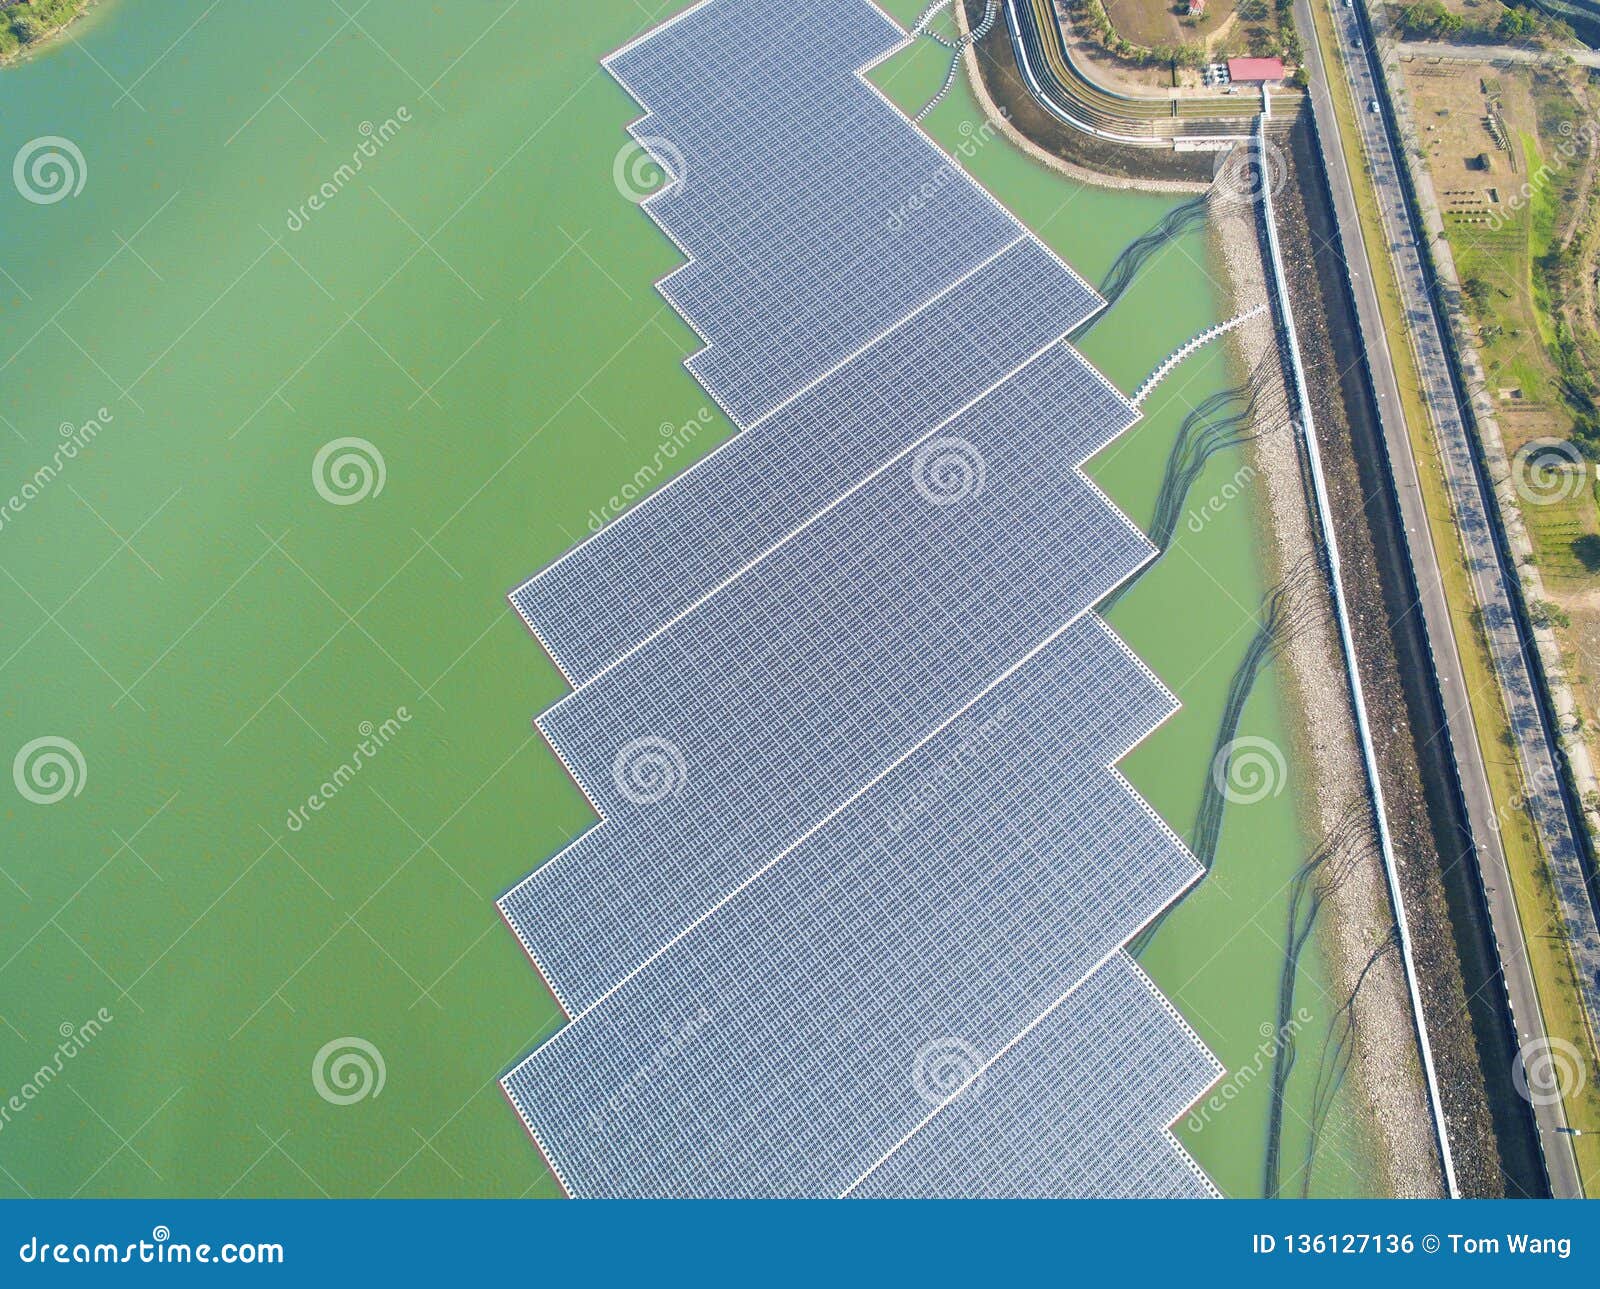 floating solar panels or solar cell platform on the lake